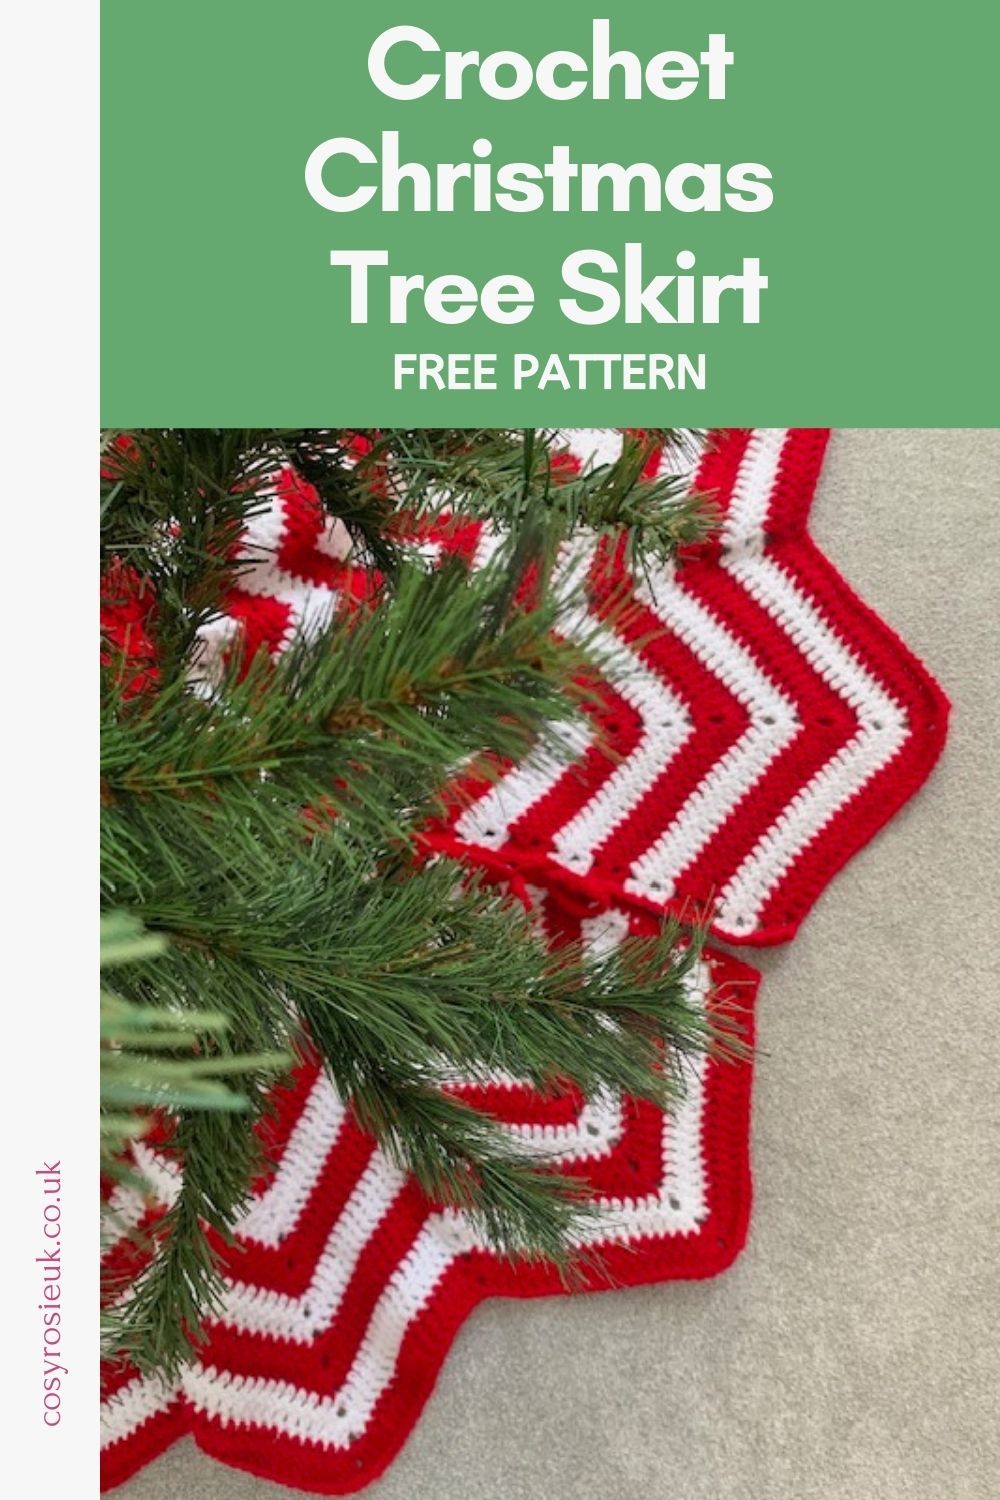 Free Crochet Christmas Tree Skirt Pattern